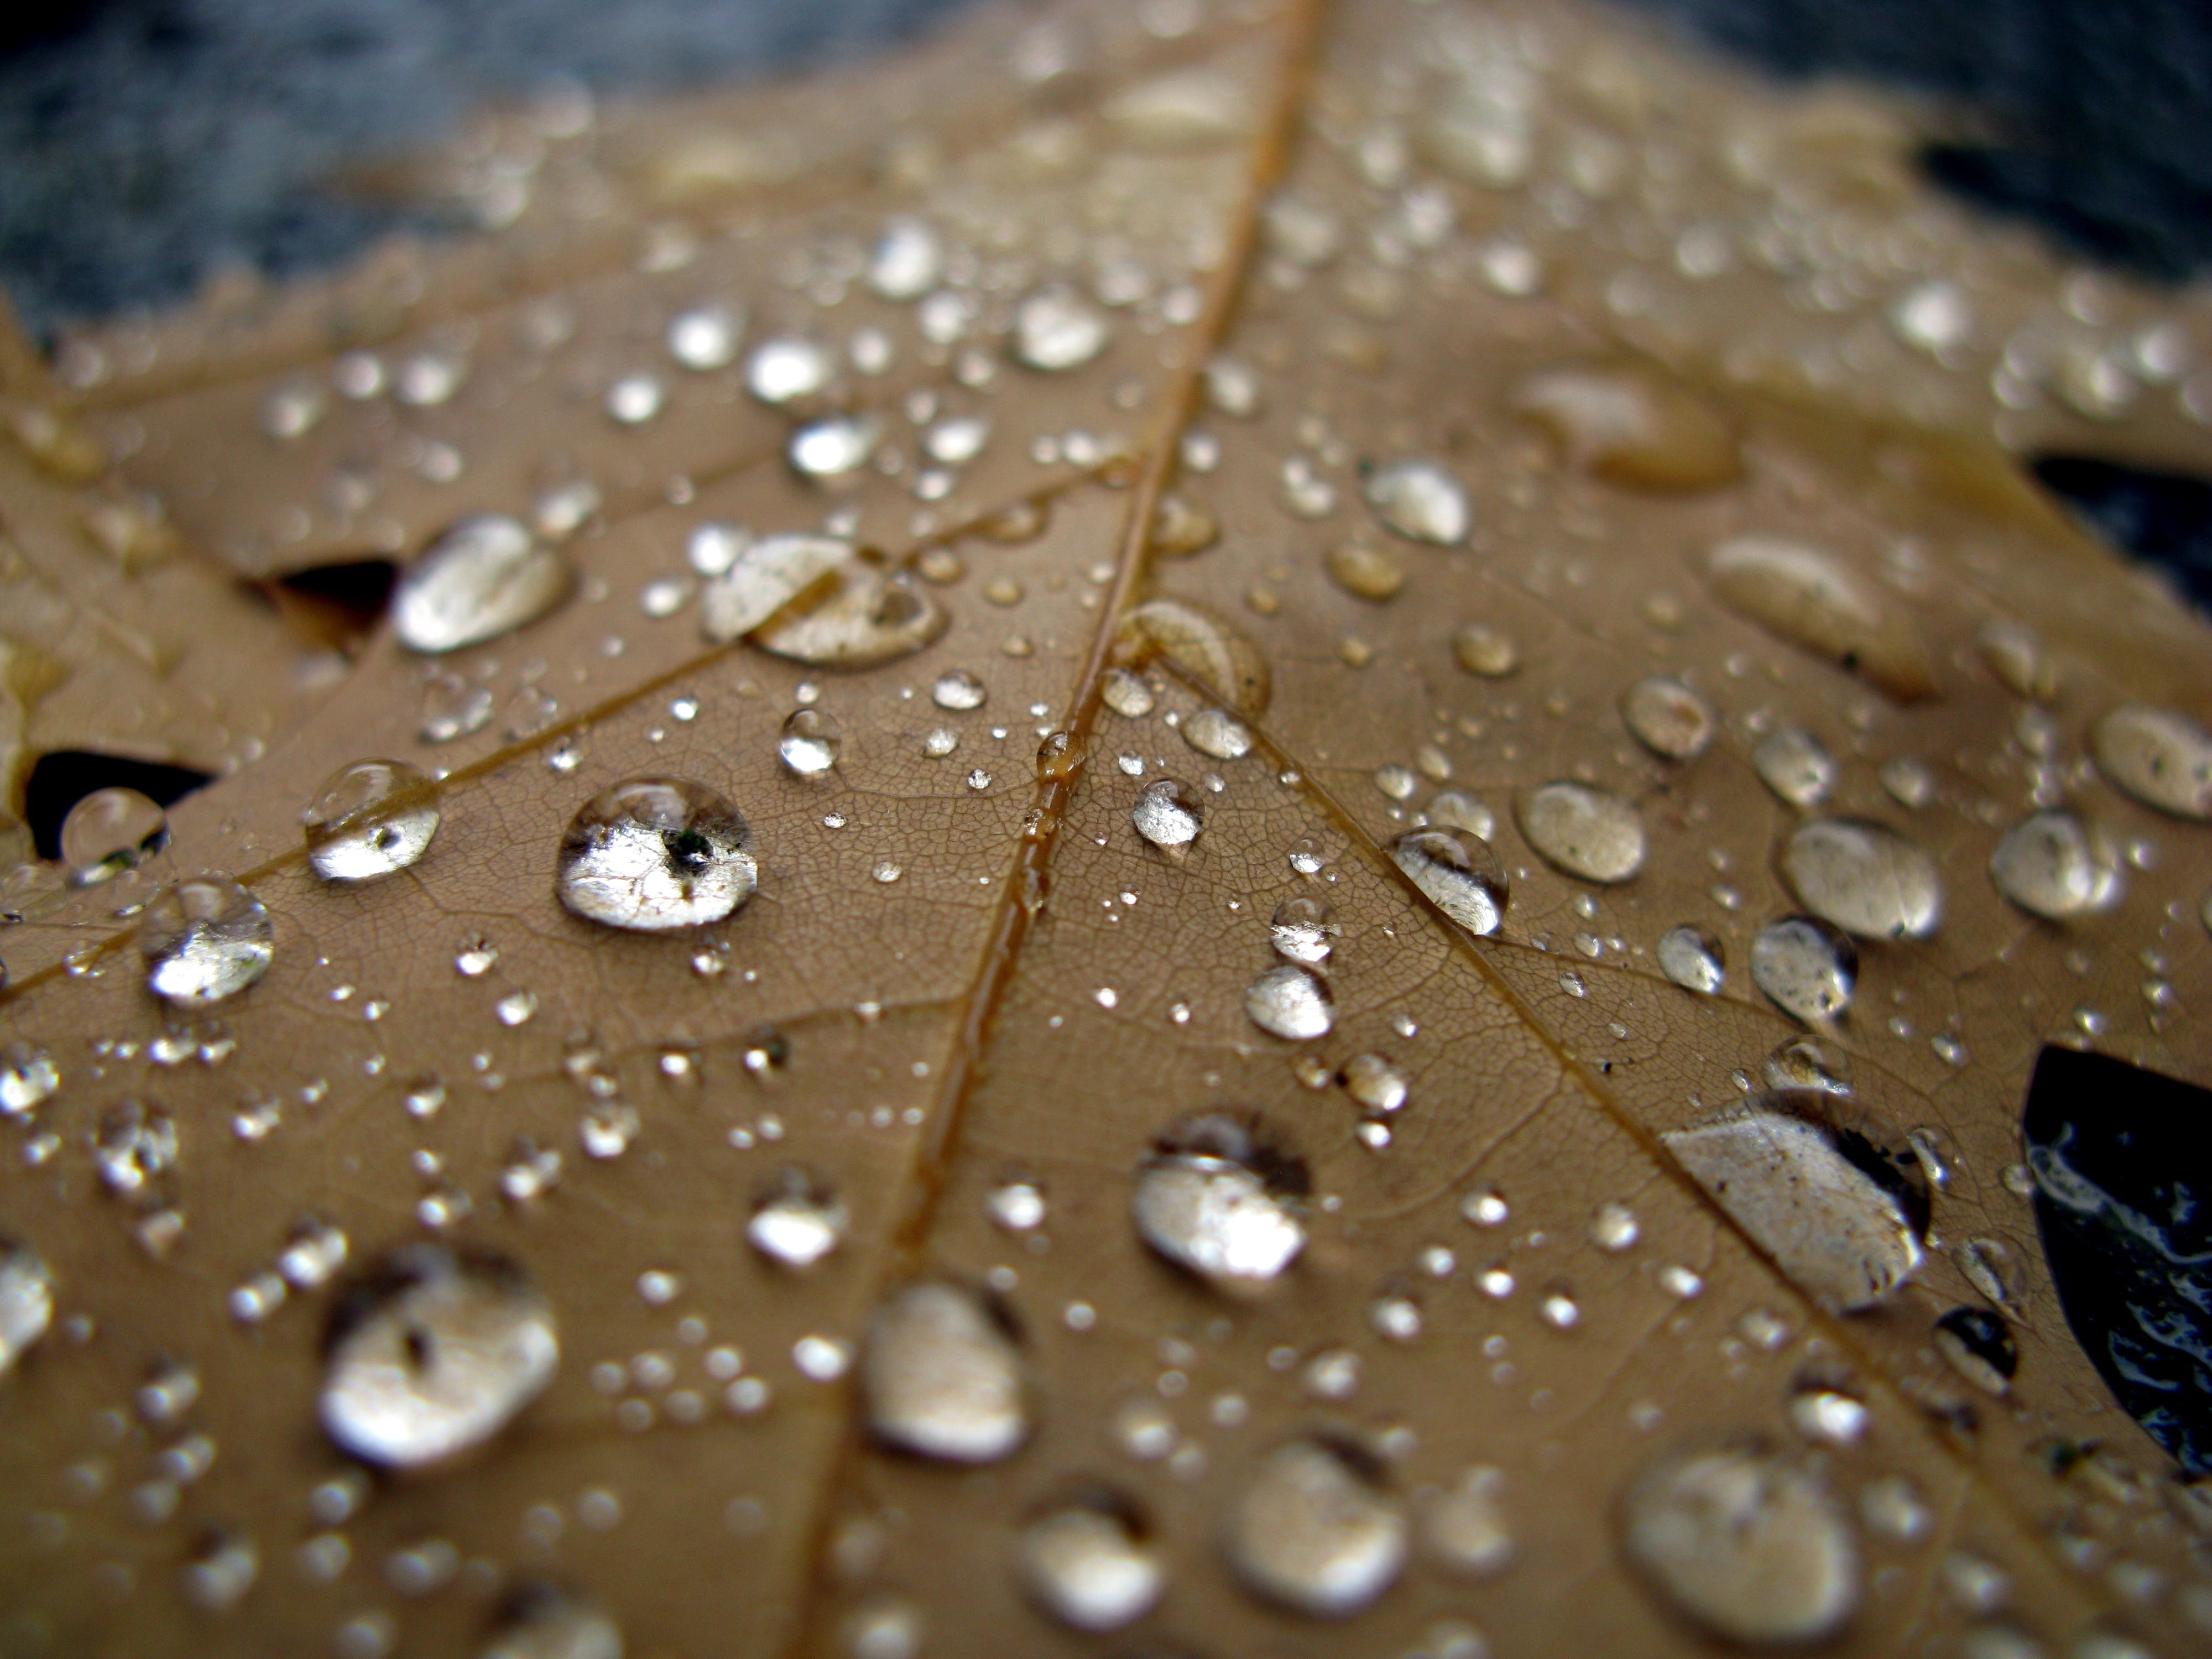 dried leaf, sheet, drop, close-up, brown, rain, raindrop, wet